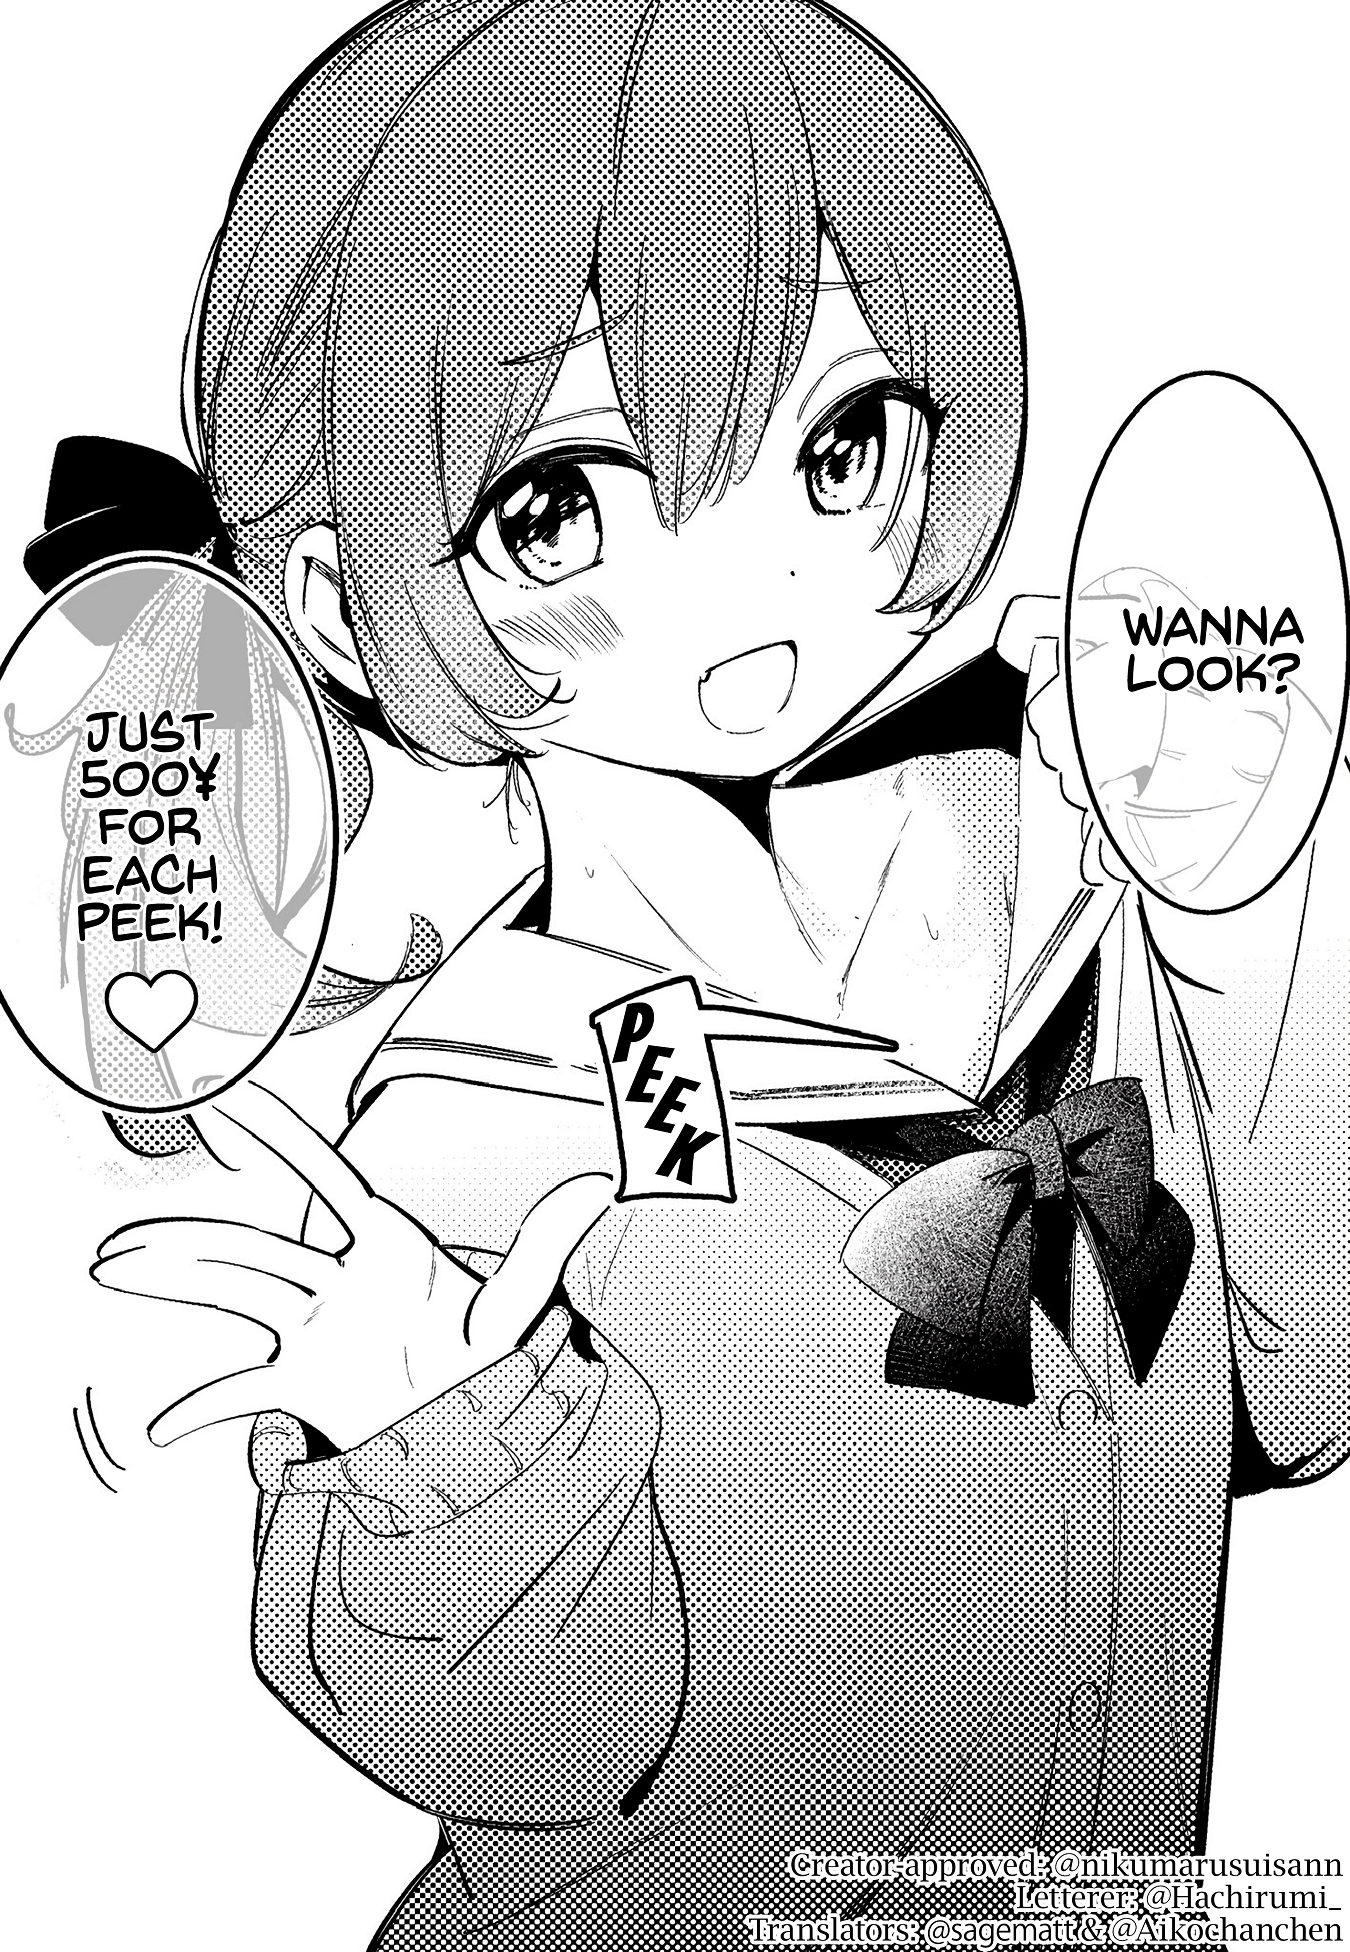 Wholesome Femboy manga